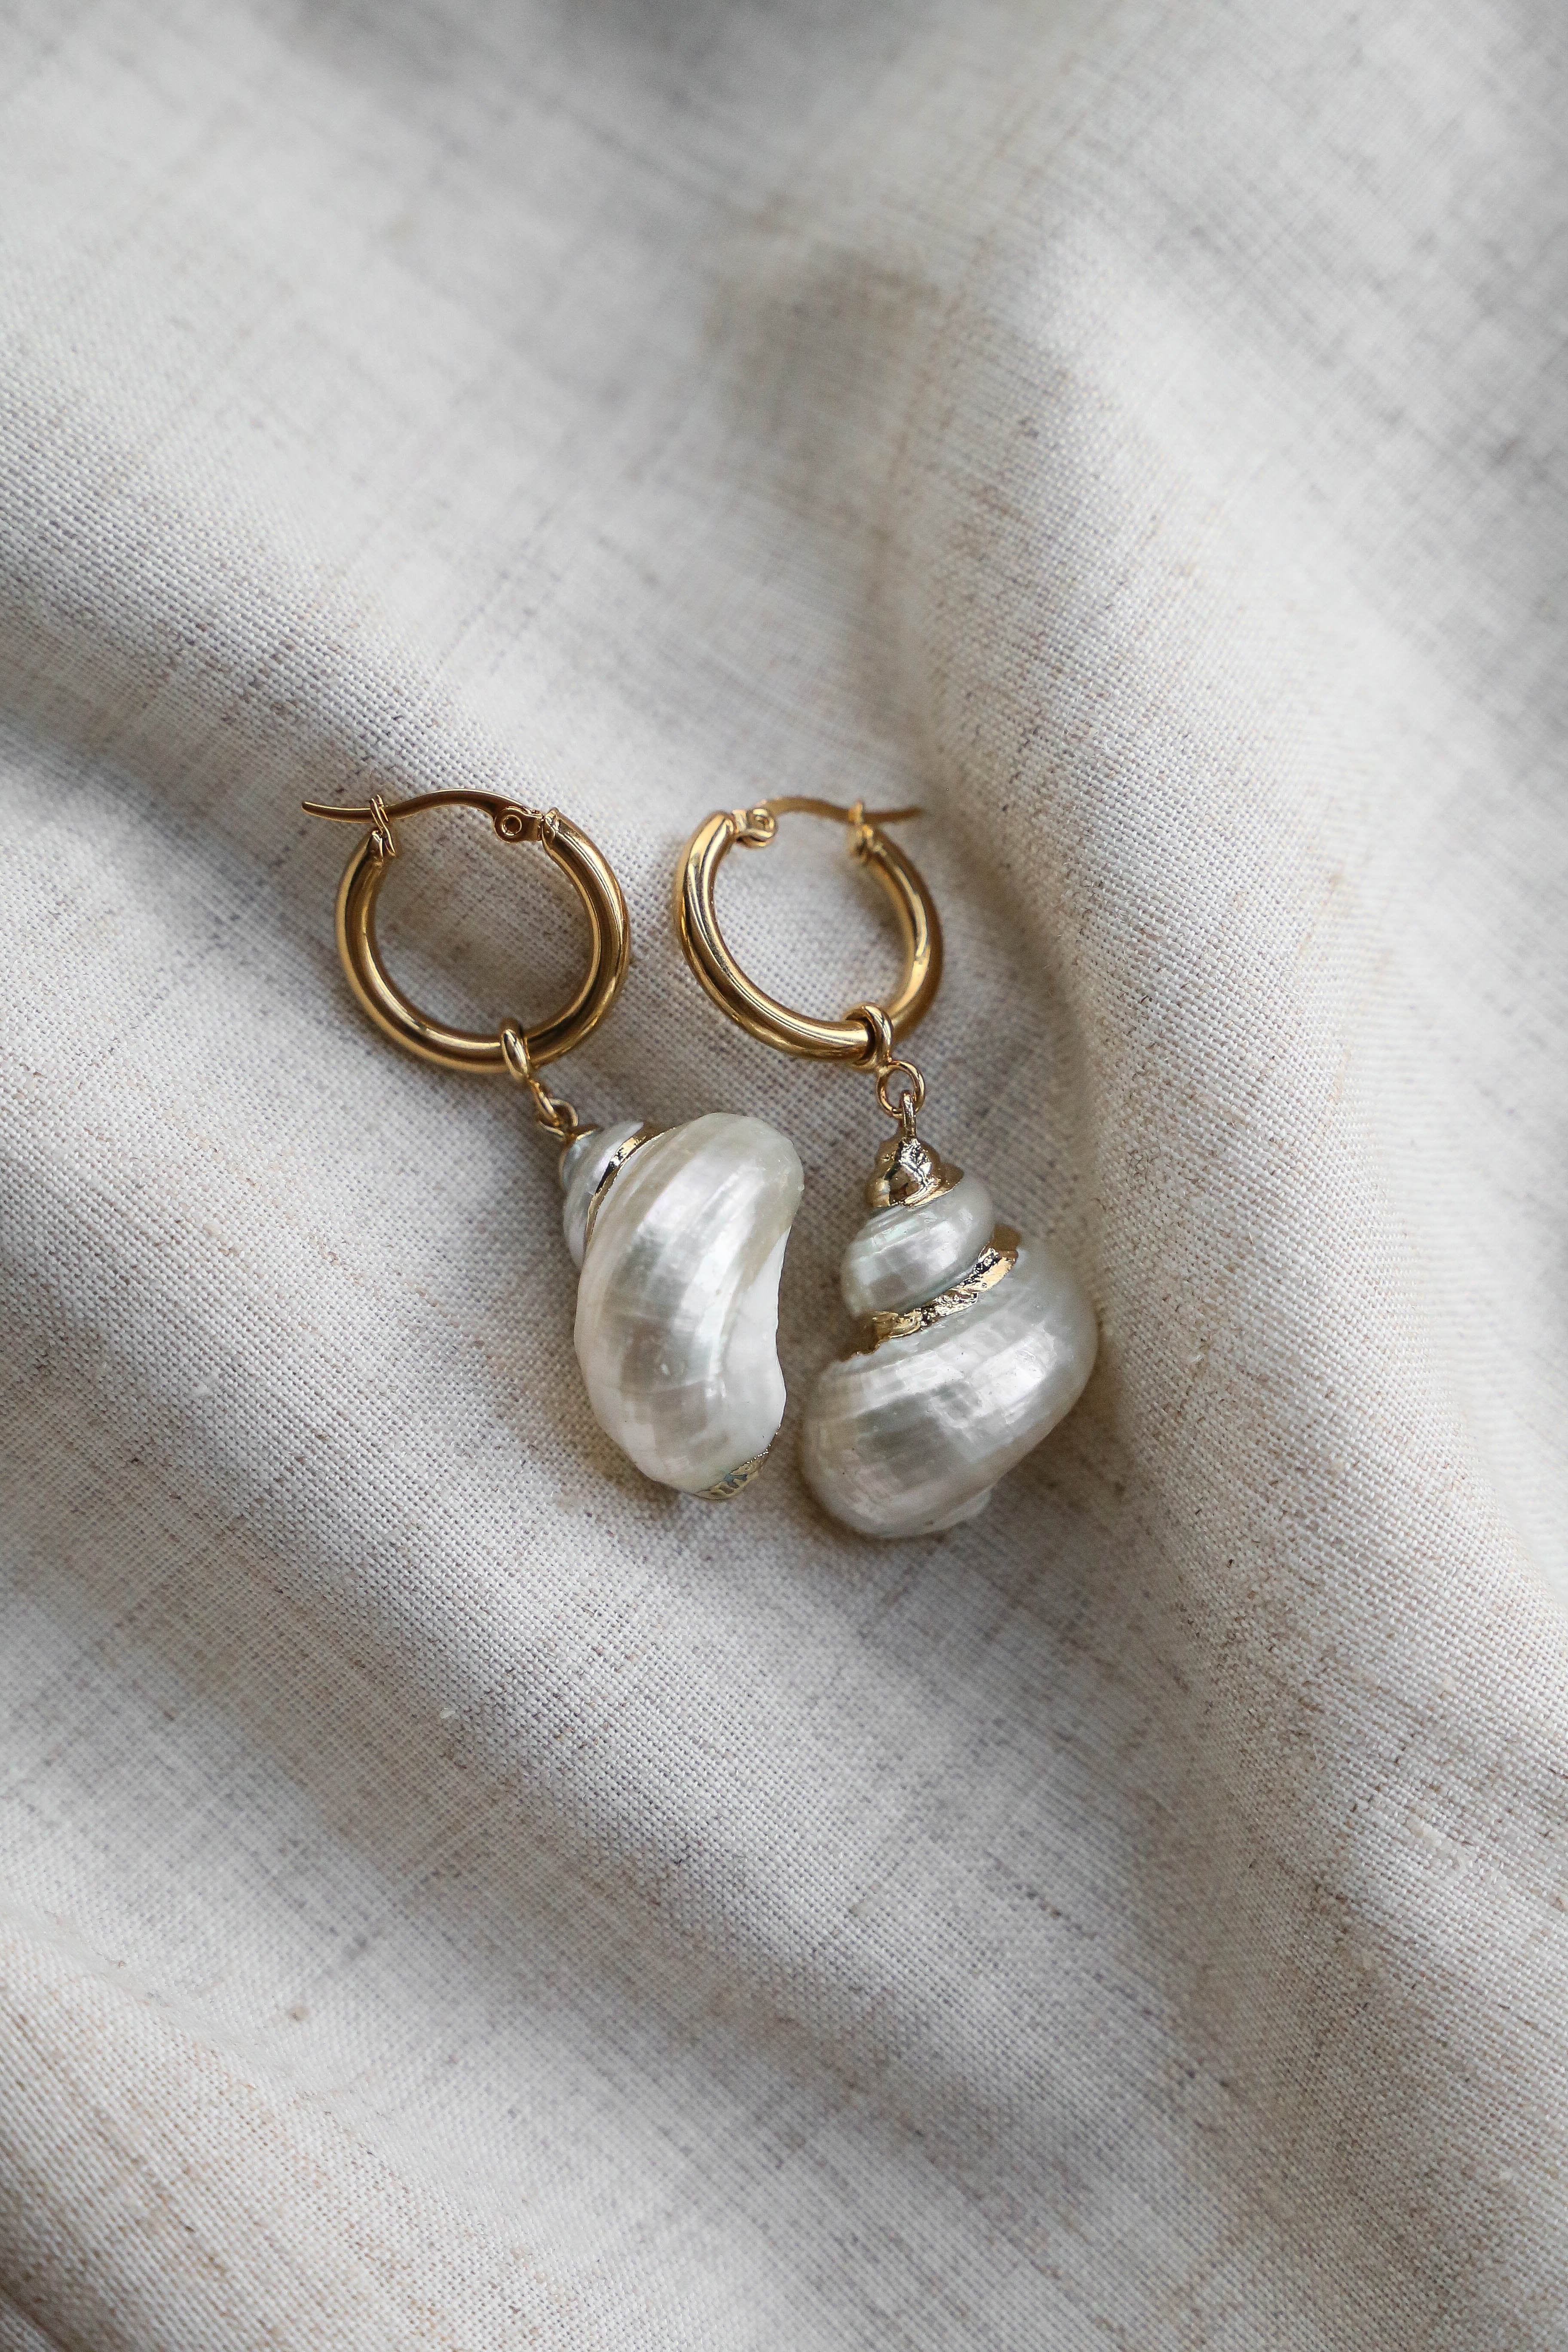 Frédérique Hoop Earrings - Boutique Minimaliste has waterproof, durable, elegant and vintage inspired jewelry